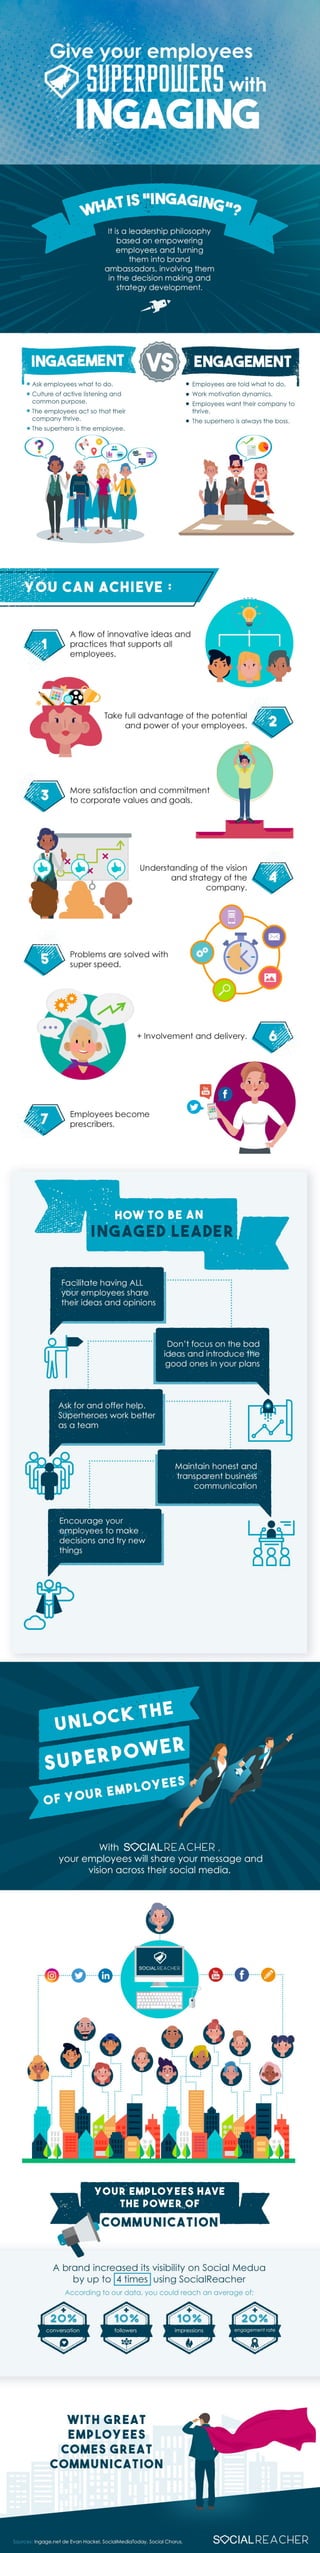 Ingaging, the new leadership philosophy